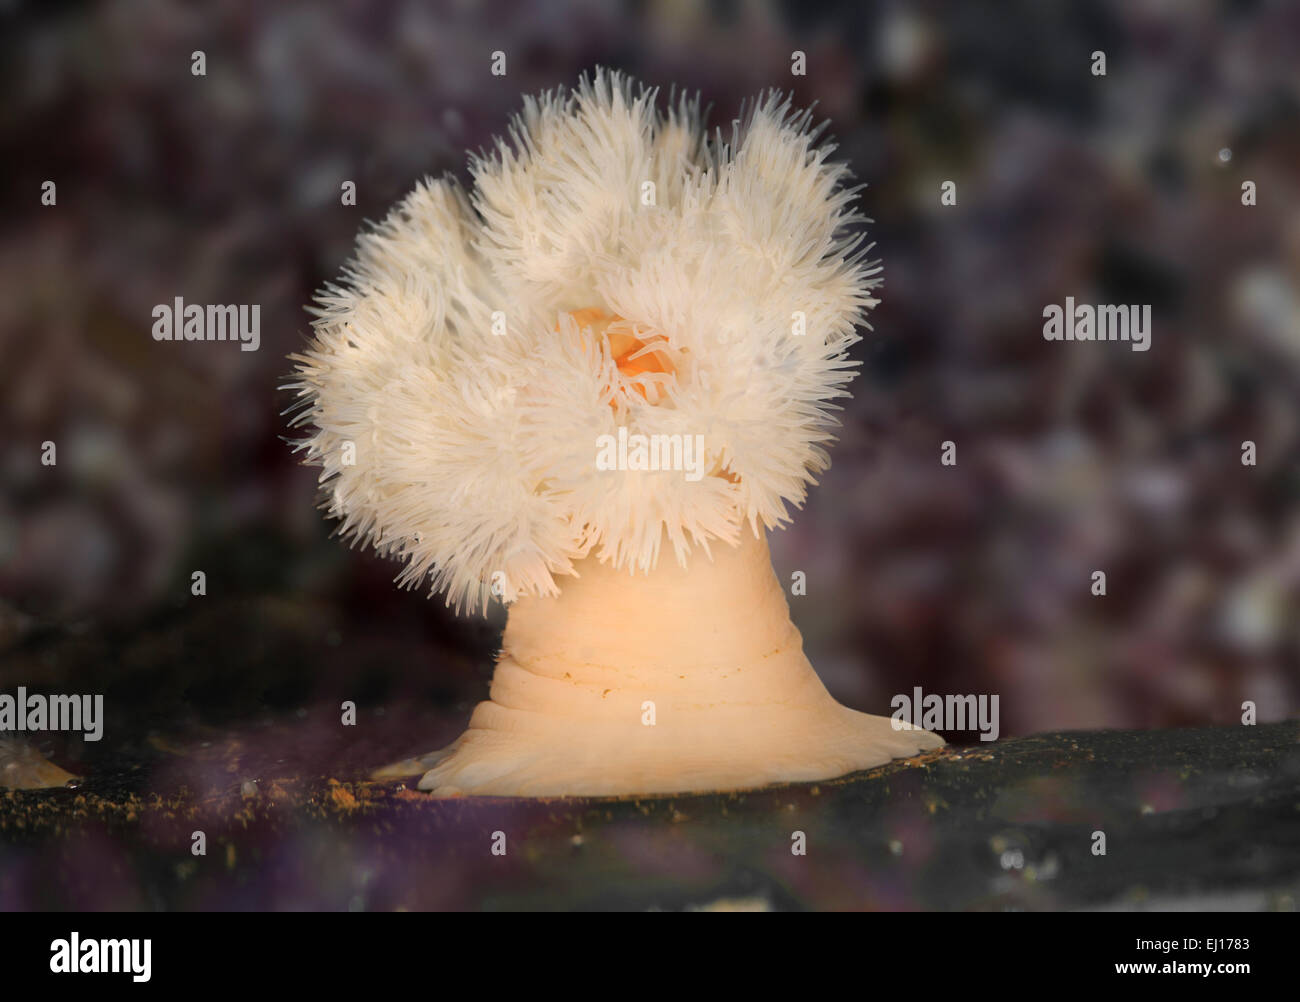 Plumose Anemone - mertridium senile Stock Photo